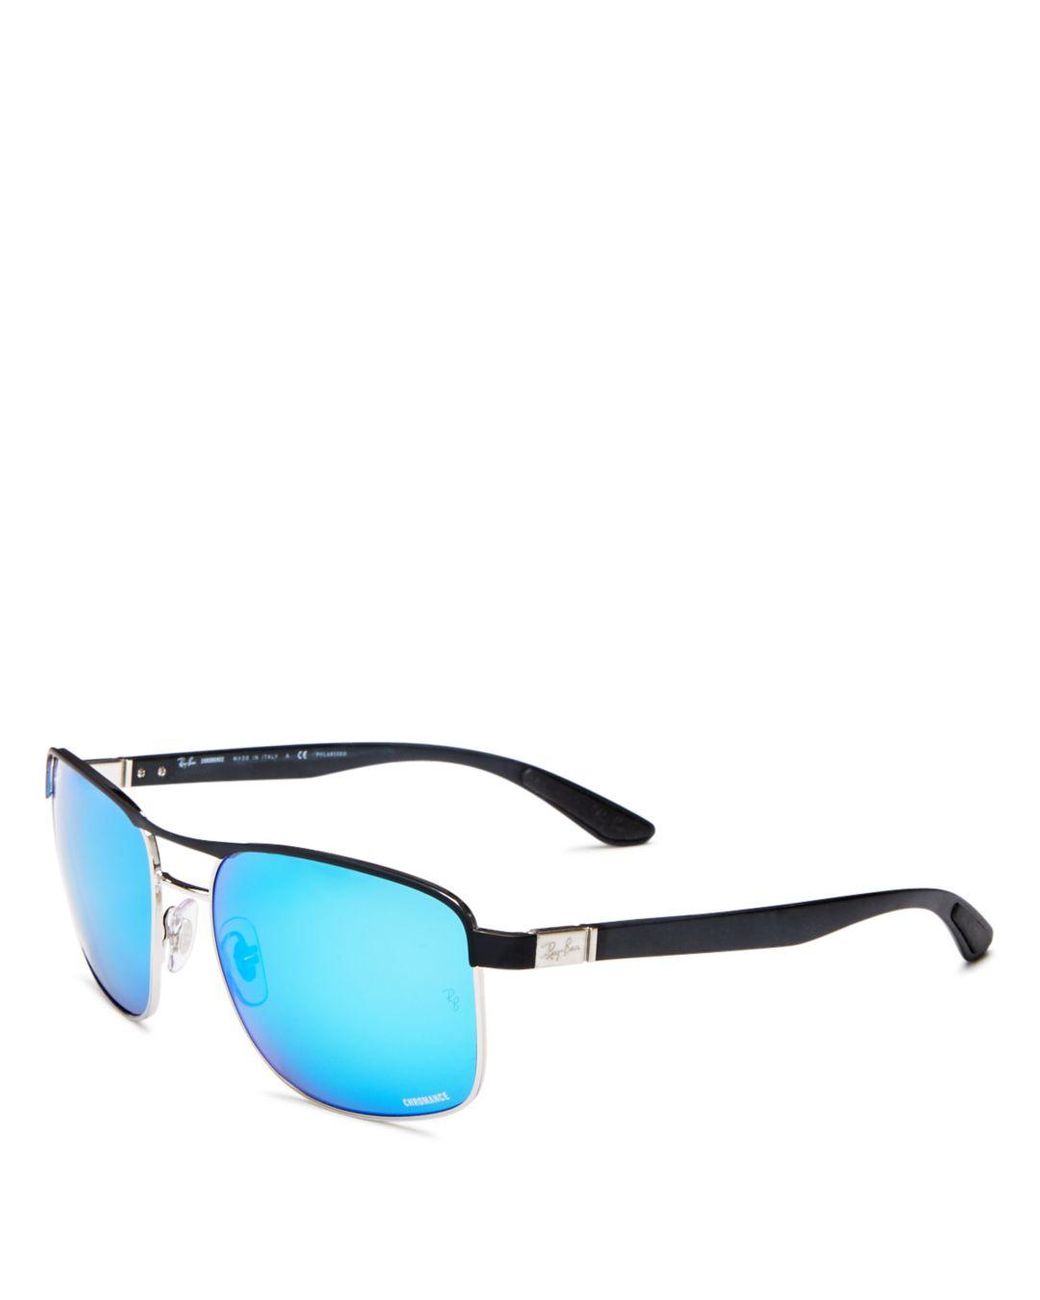 Ray Ban Ray Ban Men S Chromance Polarized Aviator Sunglasses In Blue For Men Lyst